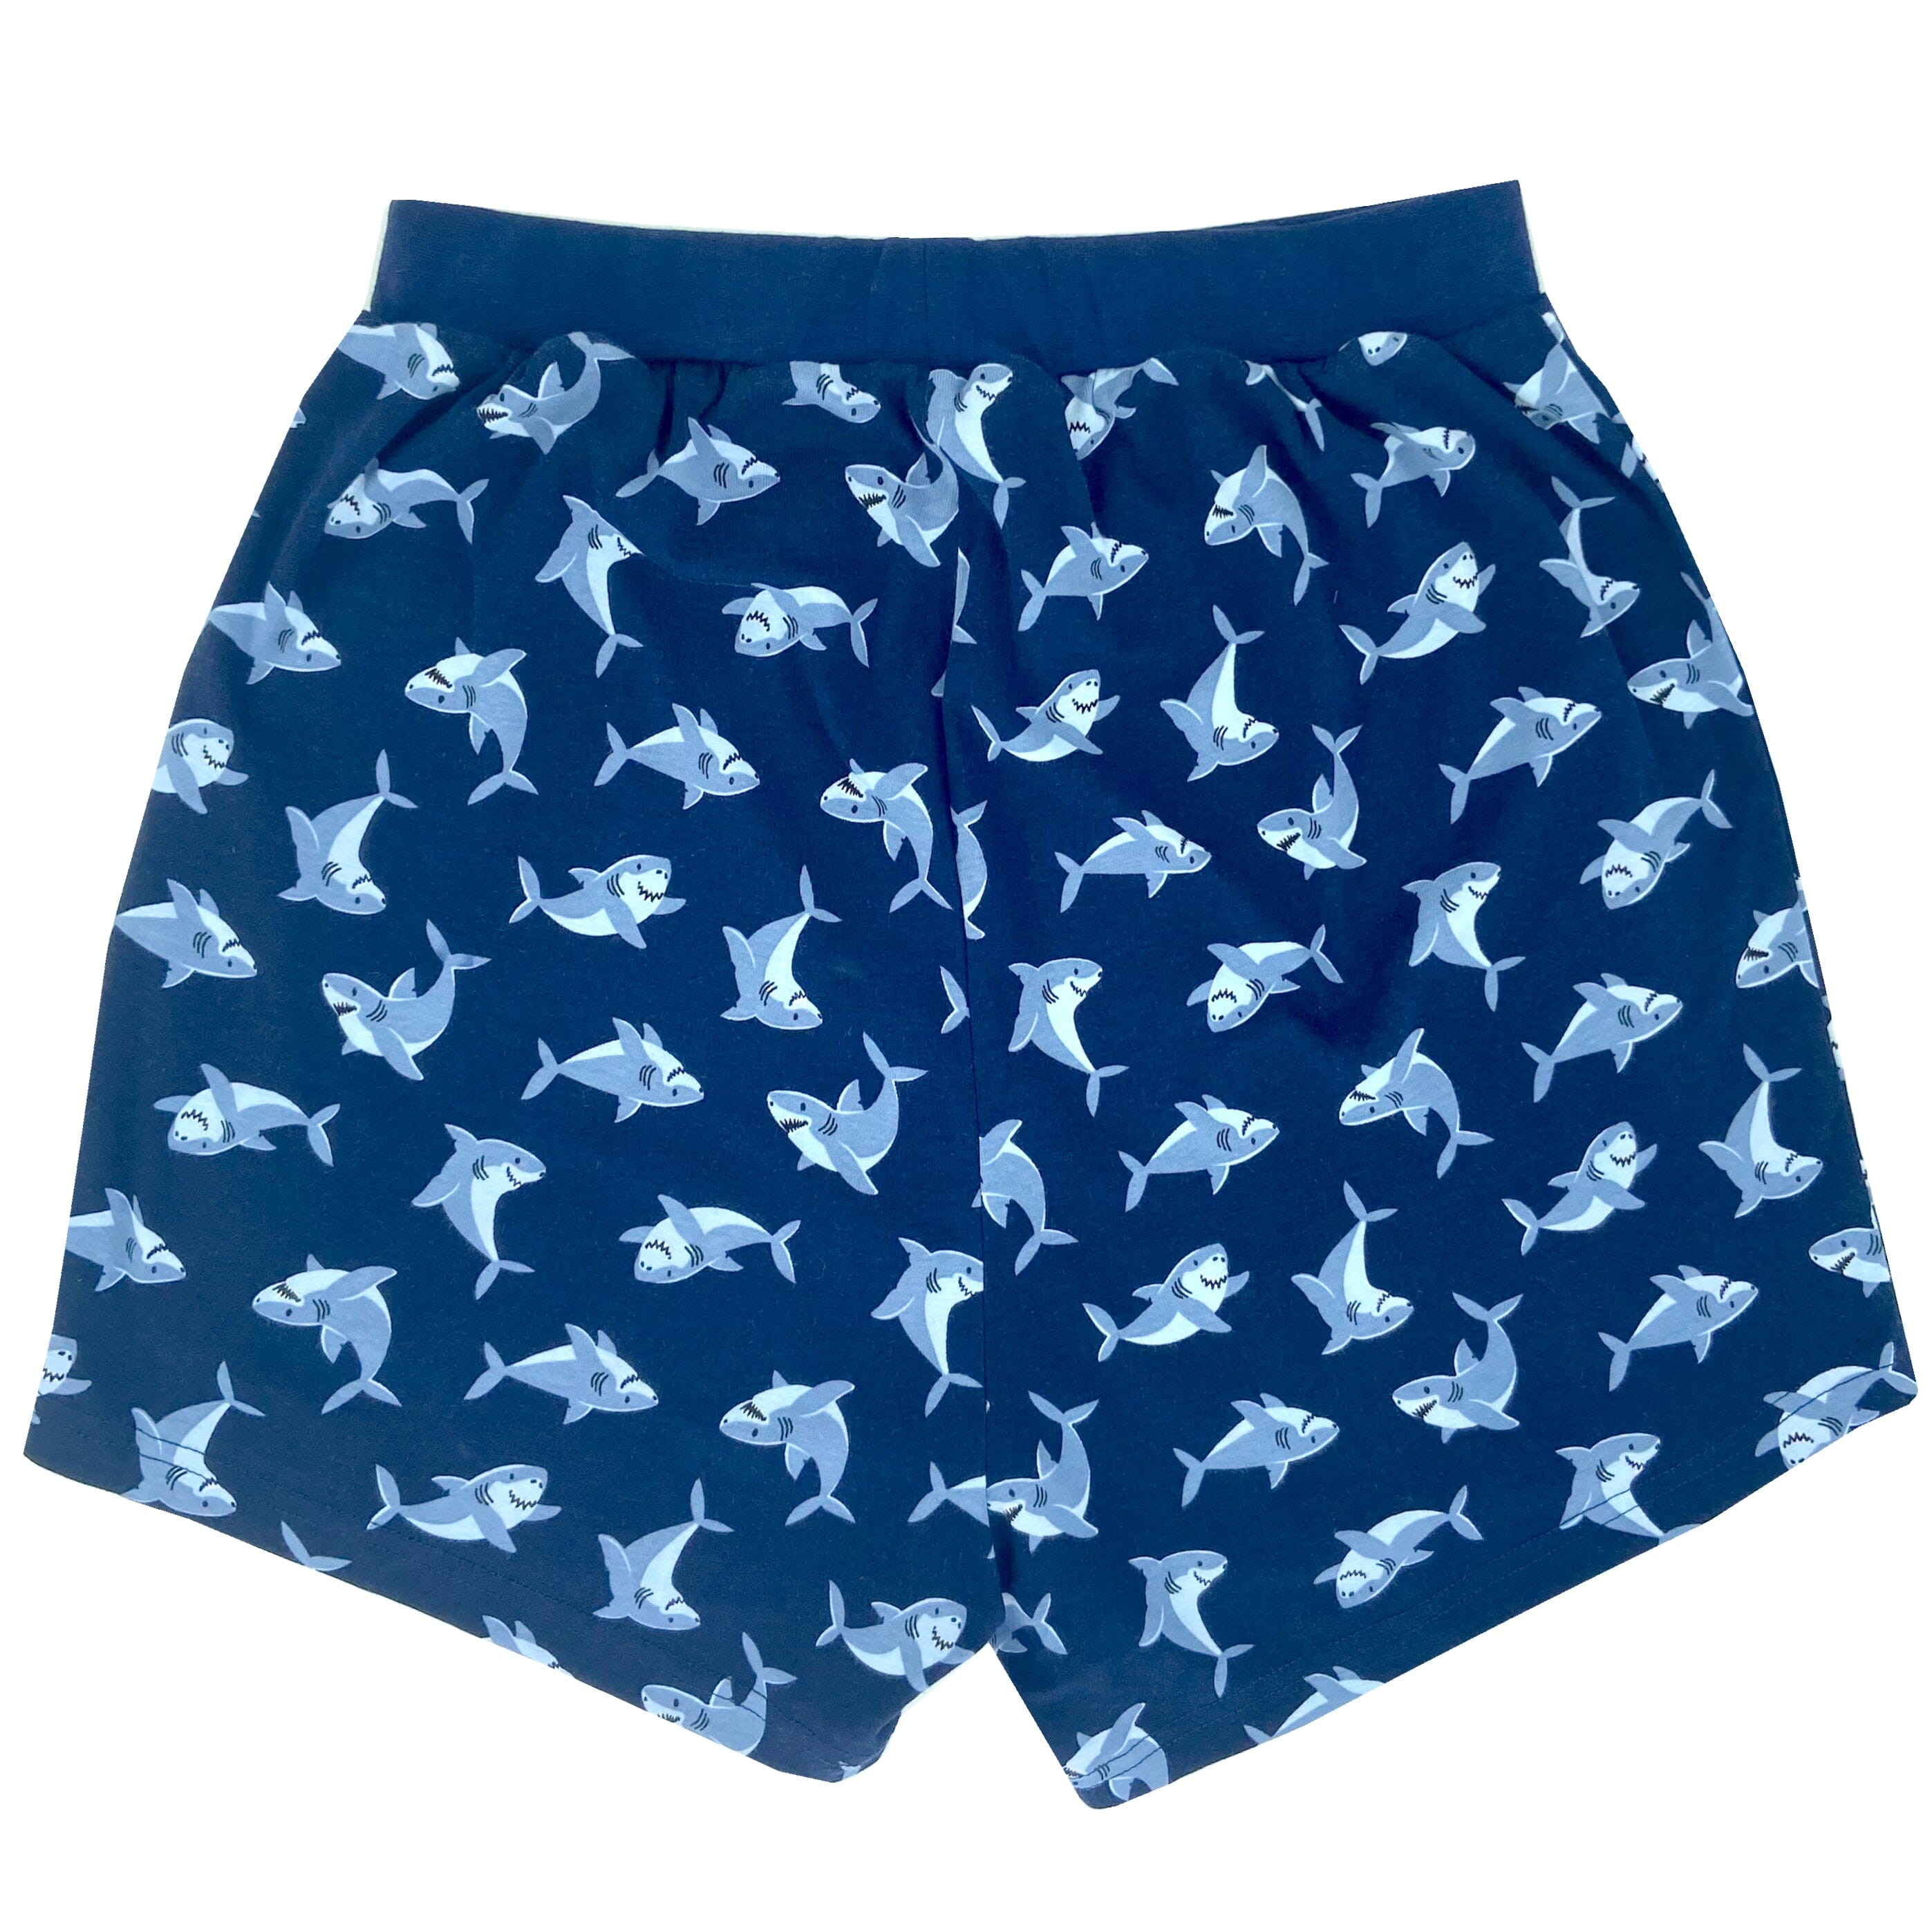 Men's Navy Blue Smiley Shark Patterned Cotton Knit Pajama Sleep Shorts